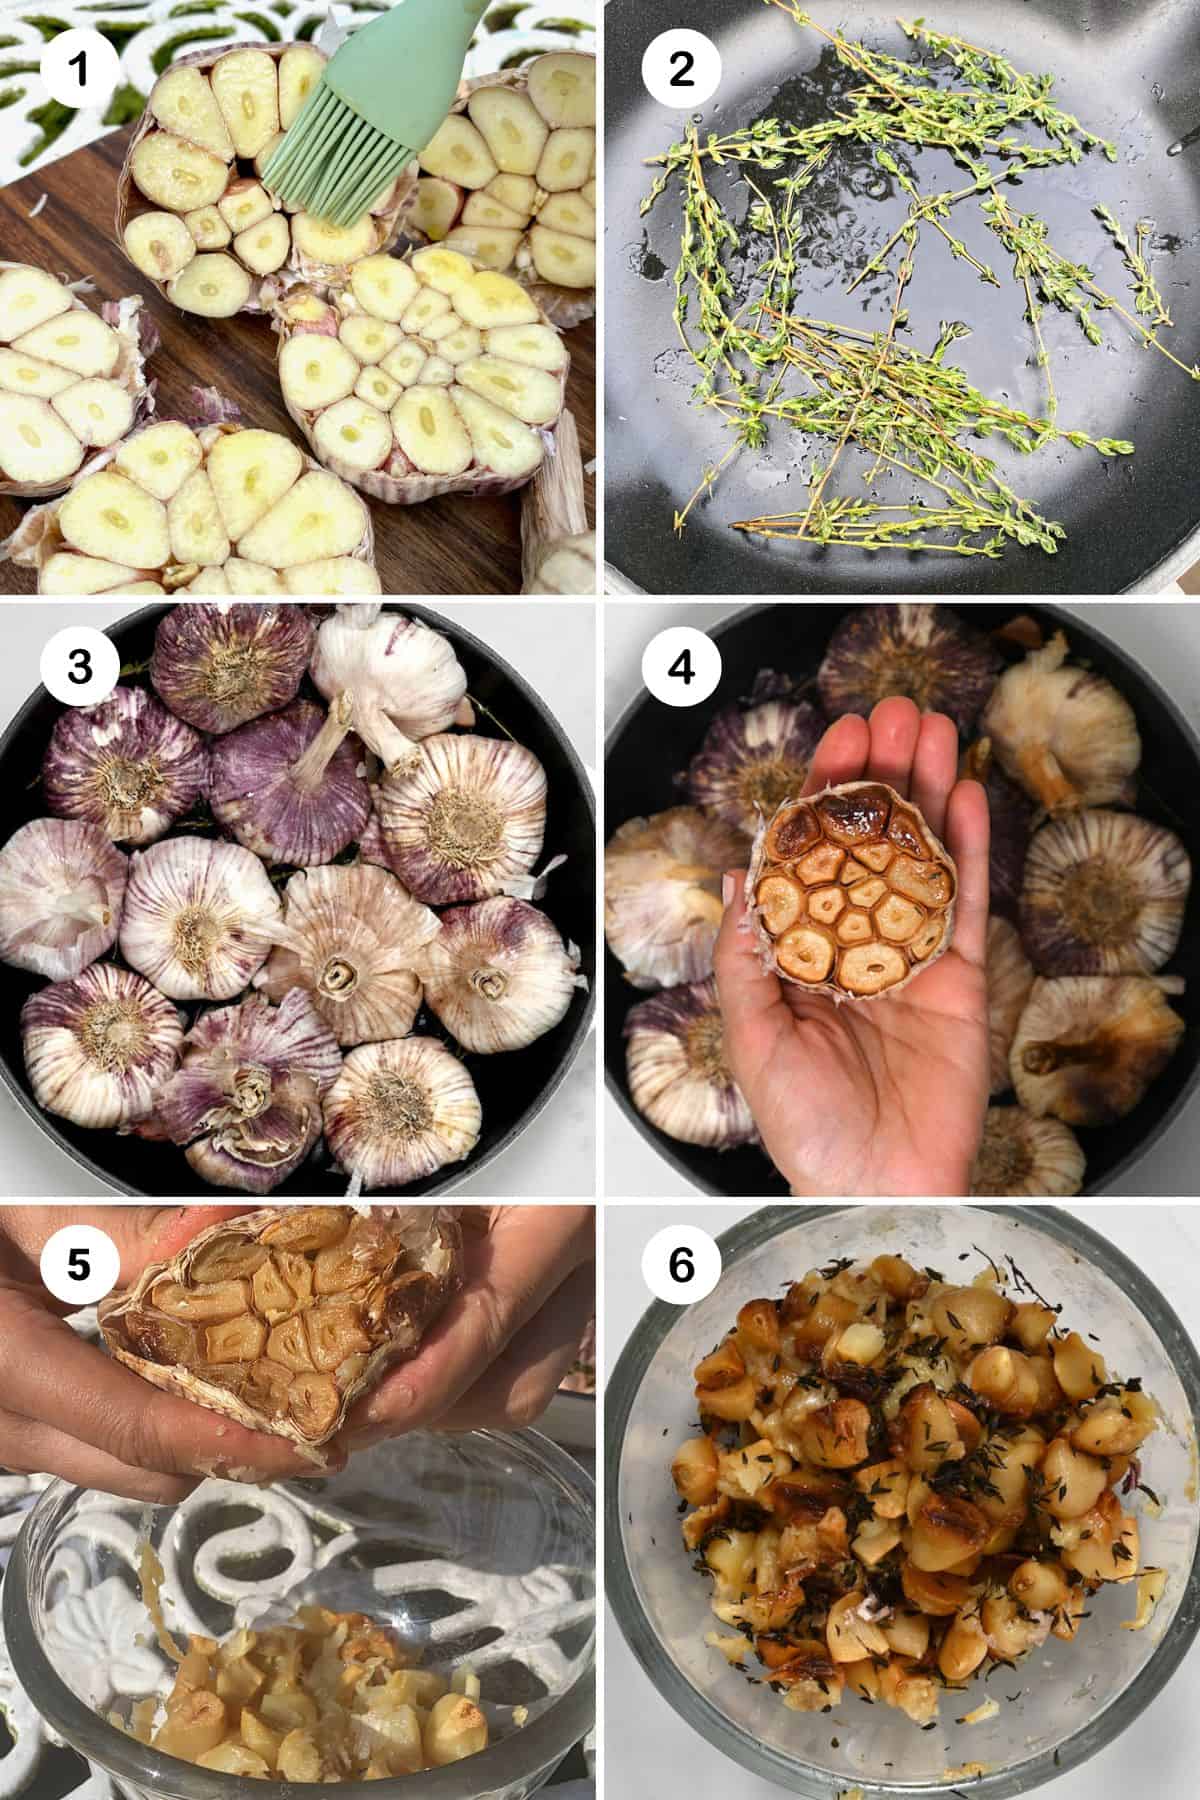 Steps for roasting garlic